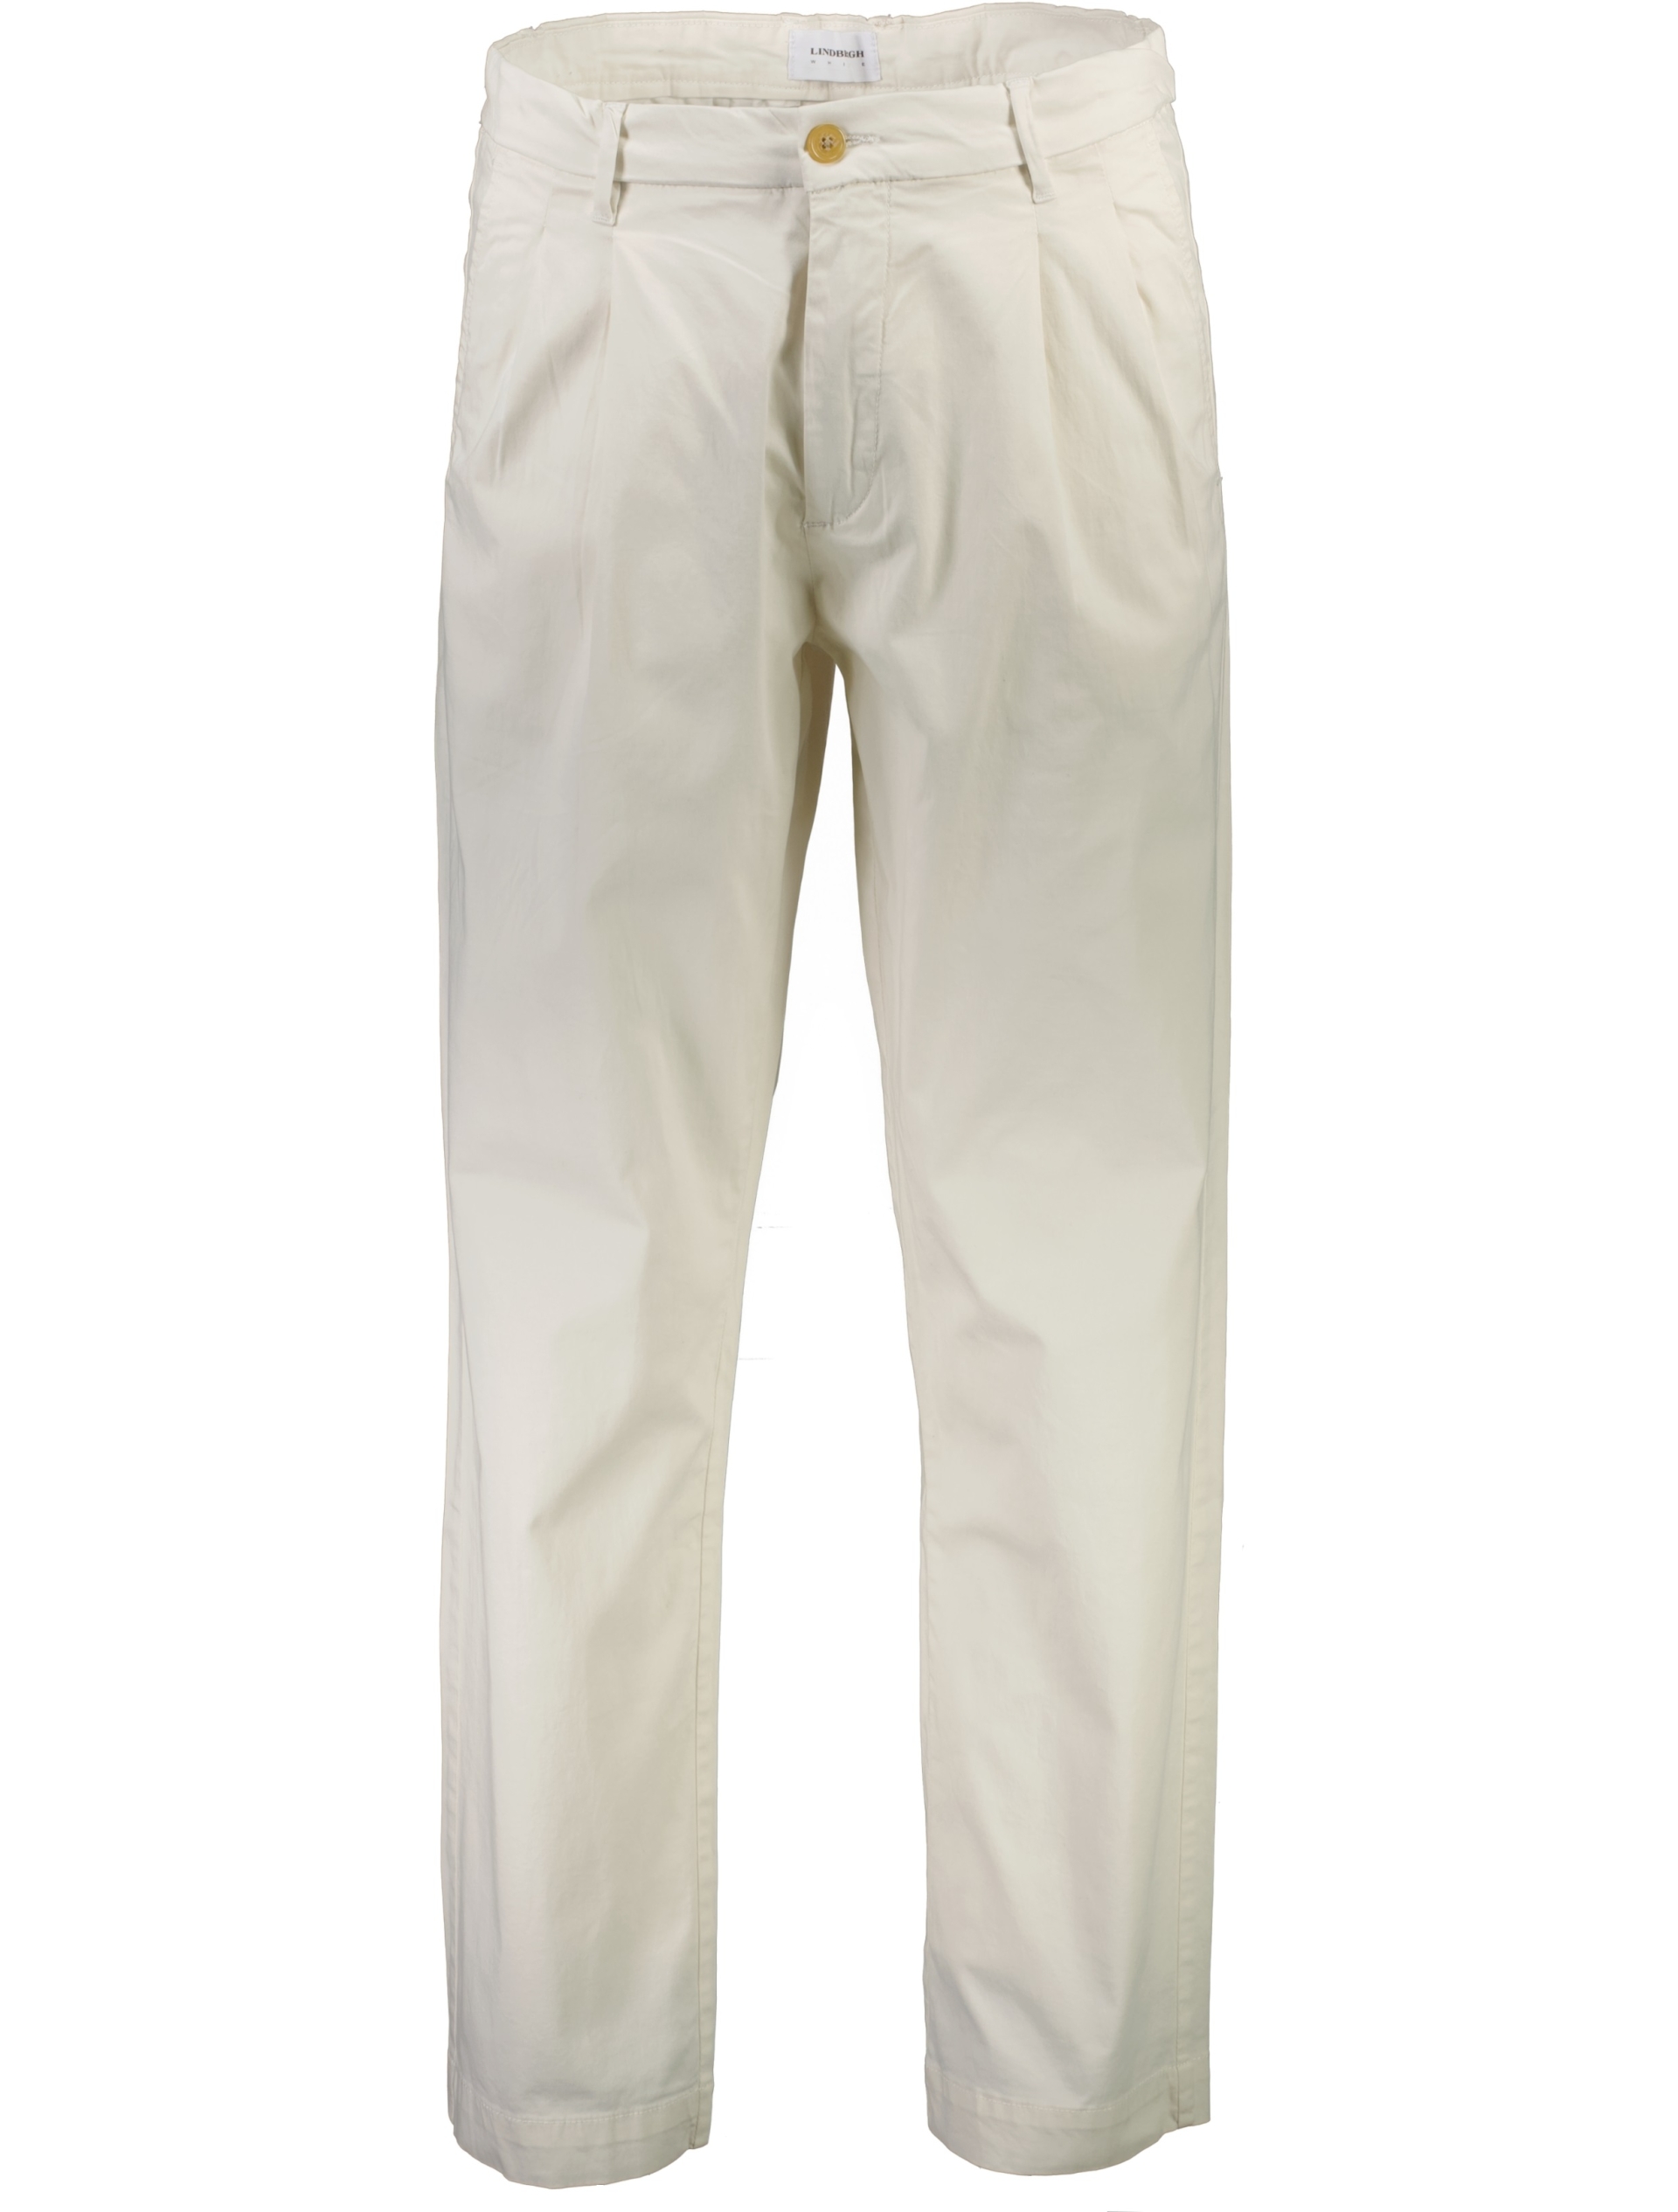 Lindbergh Casual bukser hvid / off white